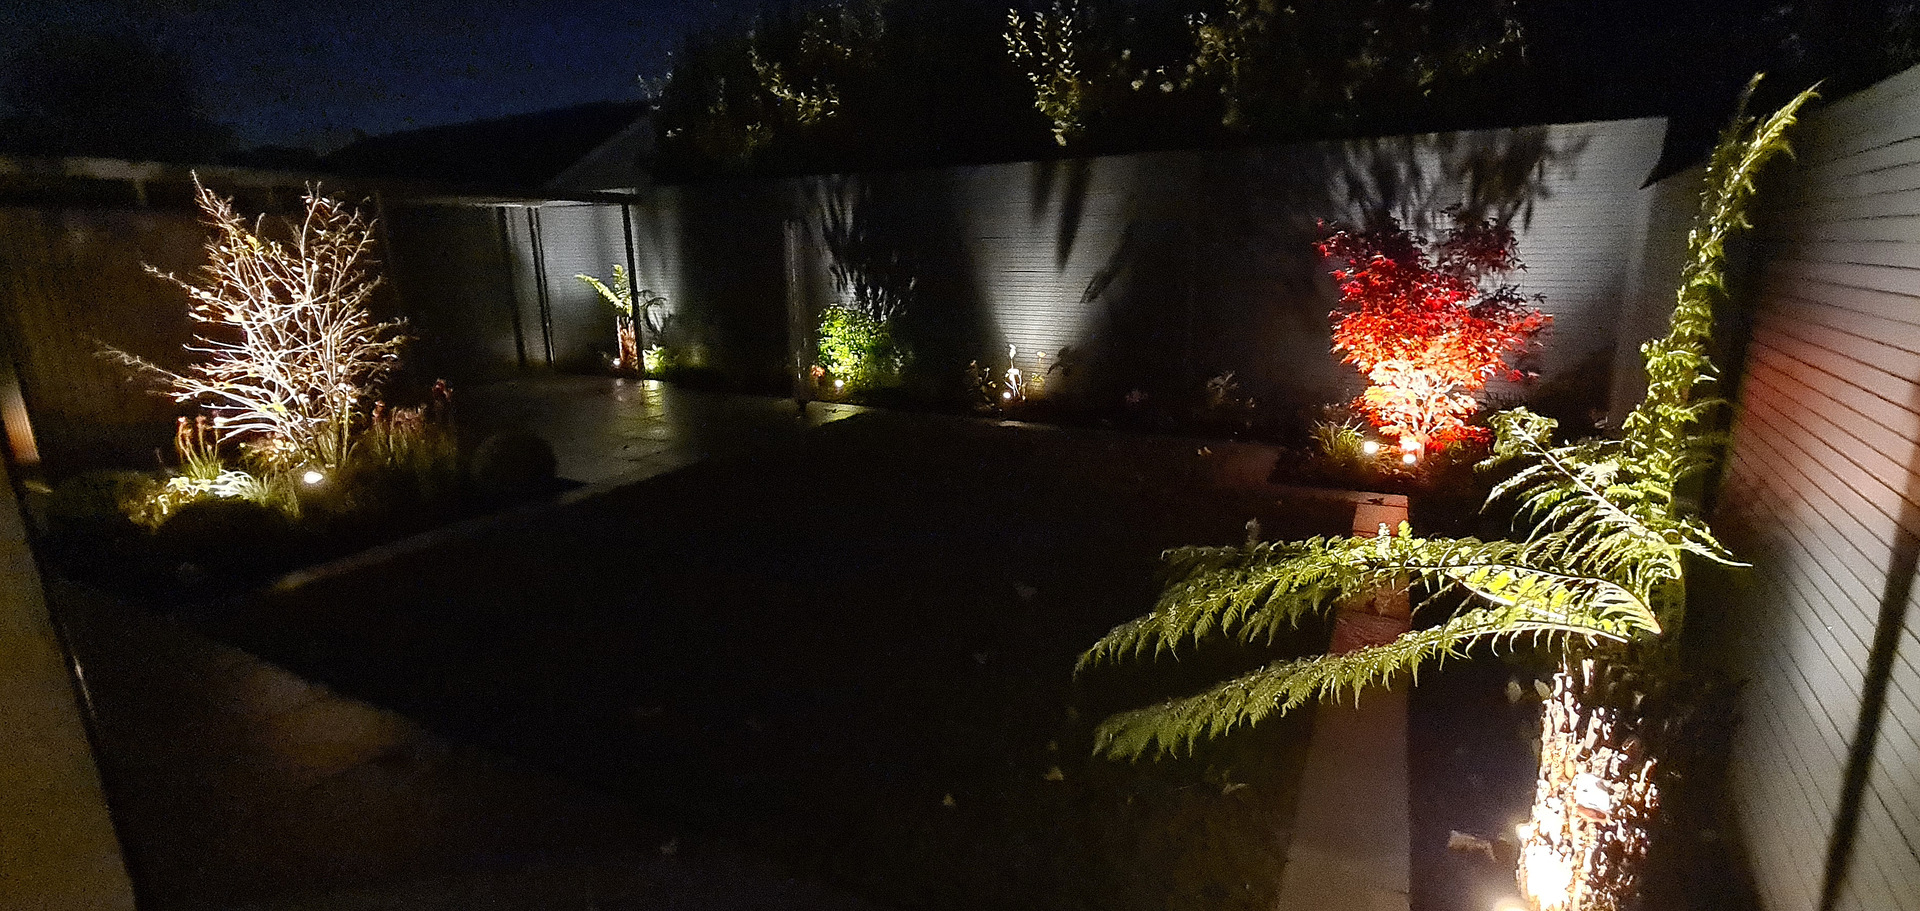 Outdoor LED Garden Lighting in Clontarf, Dublin, Ireland